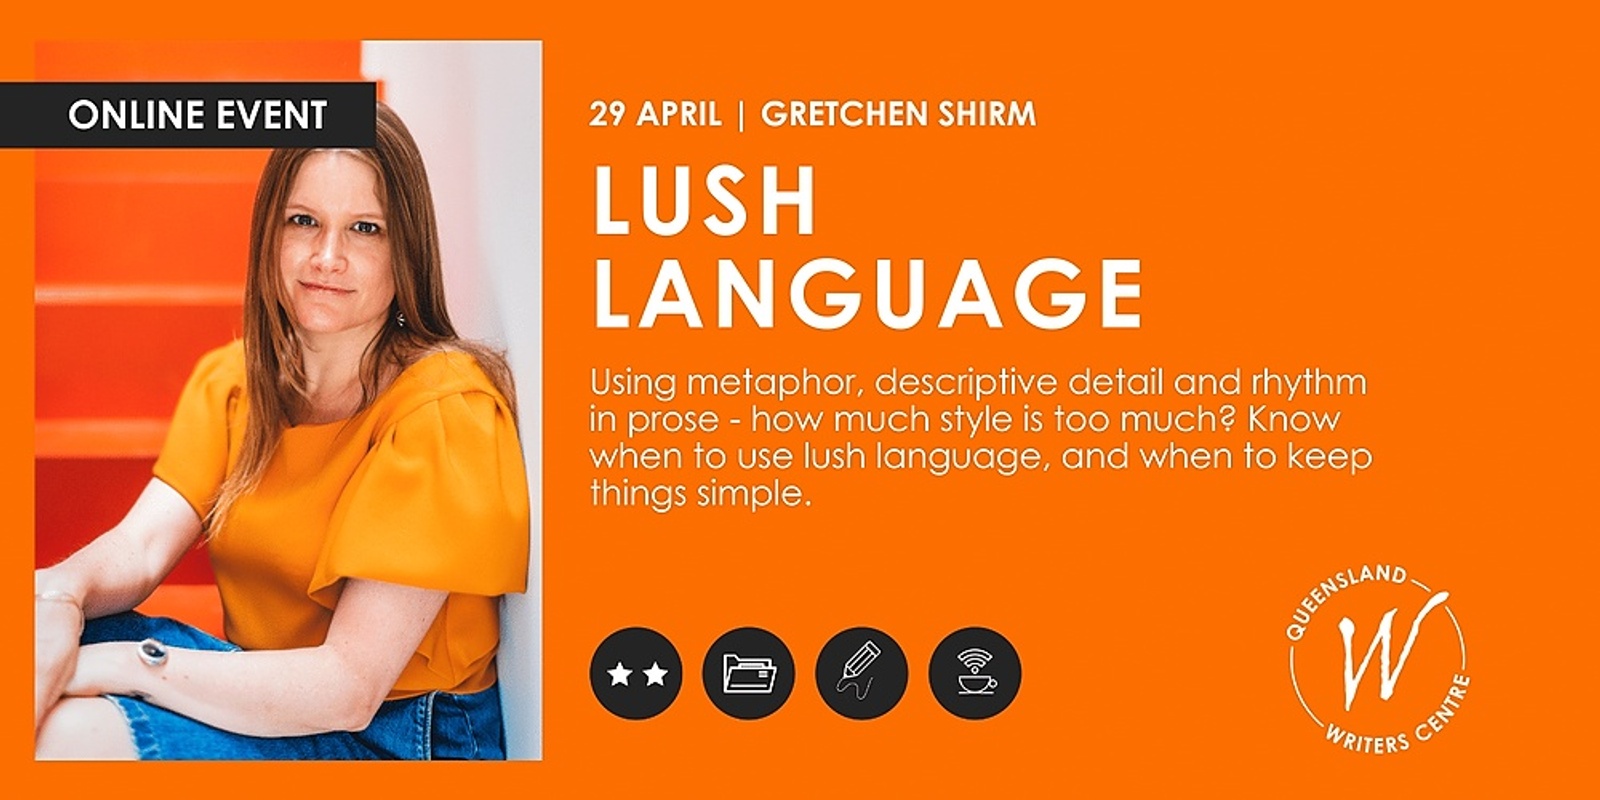 Lush Language with Gretchen Shirm